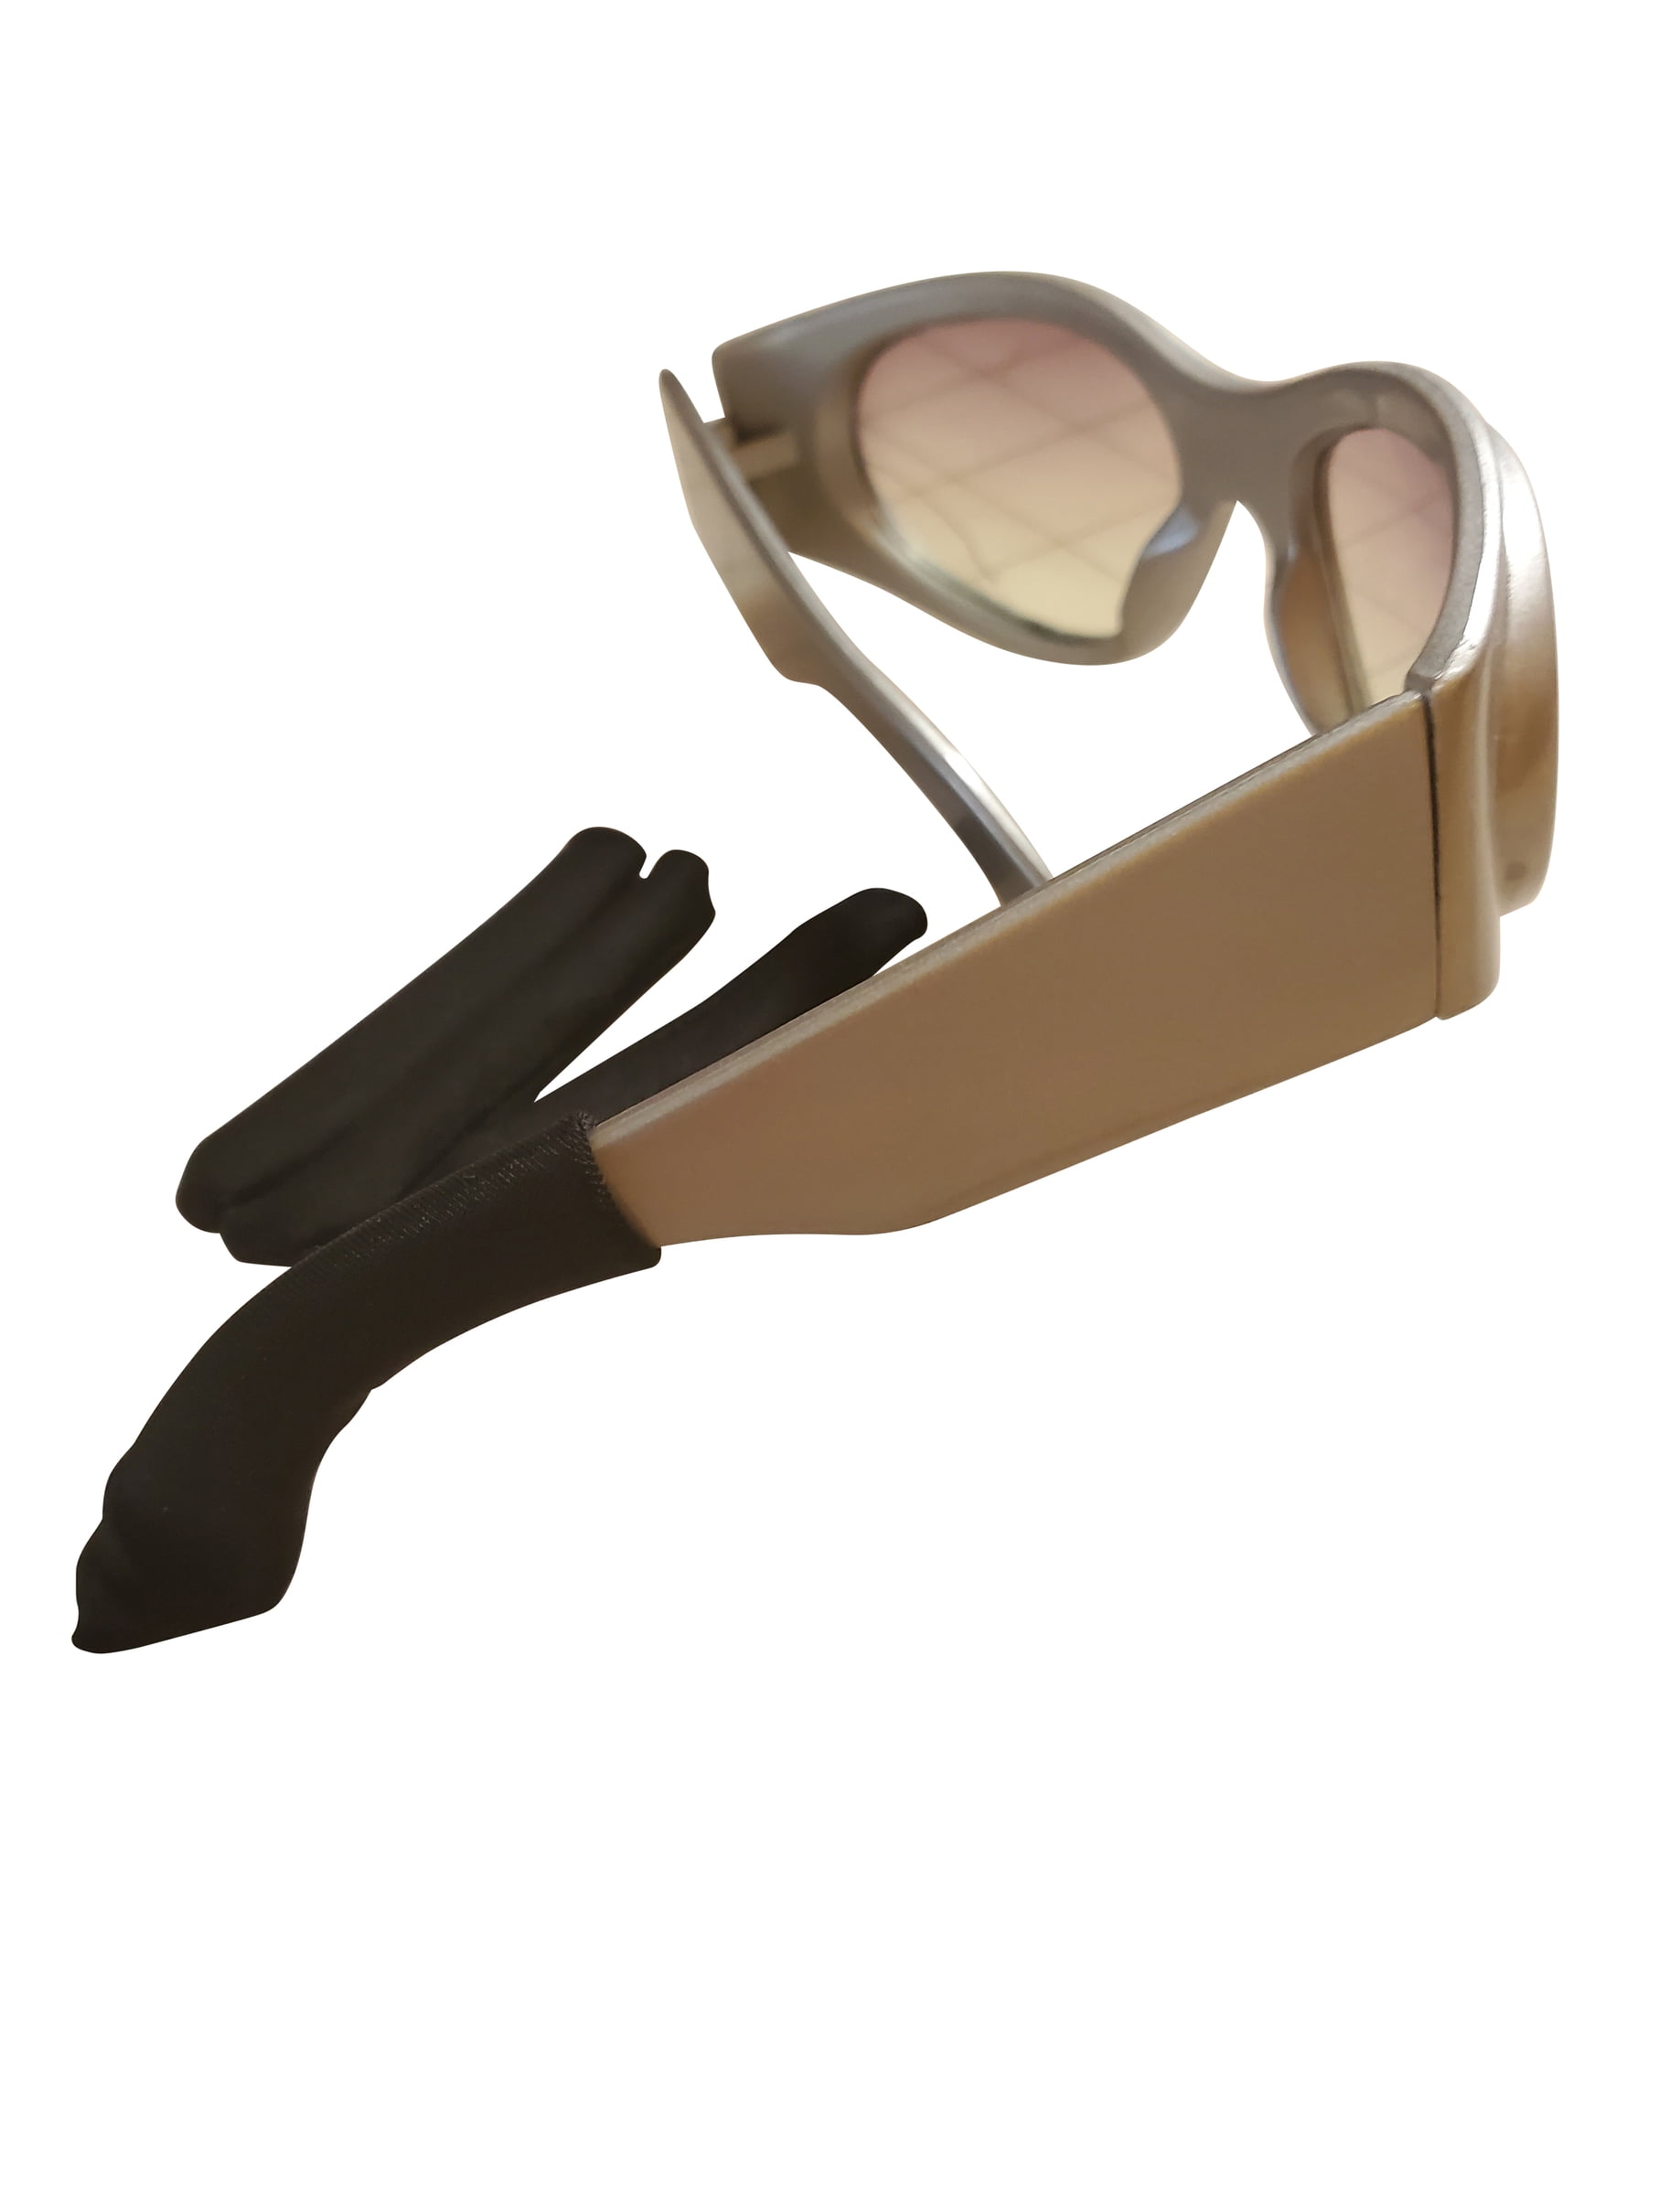 Eyewear Sleeve Temple Arm Cover Socks Eyeglass Sunglasses Comfort 